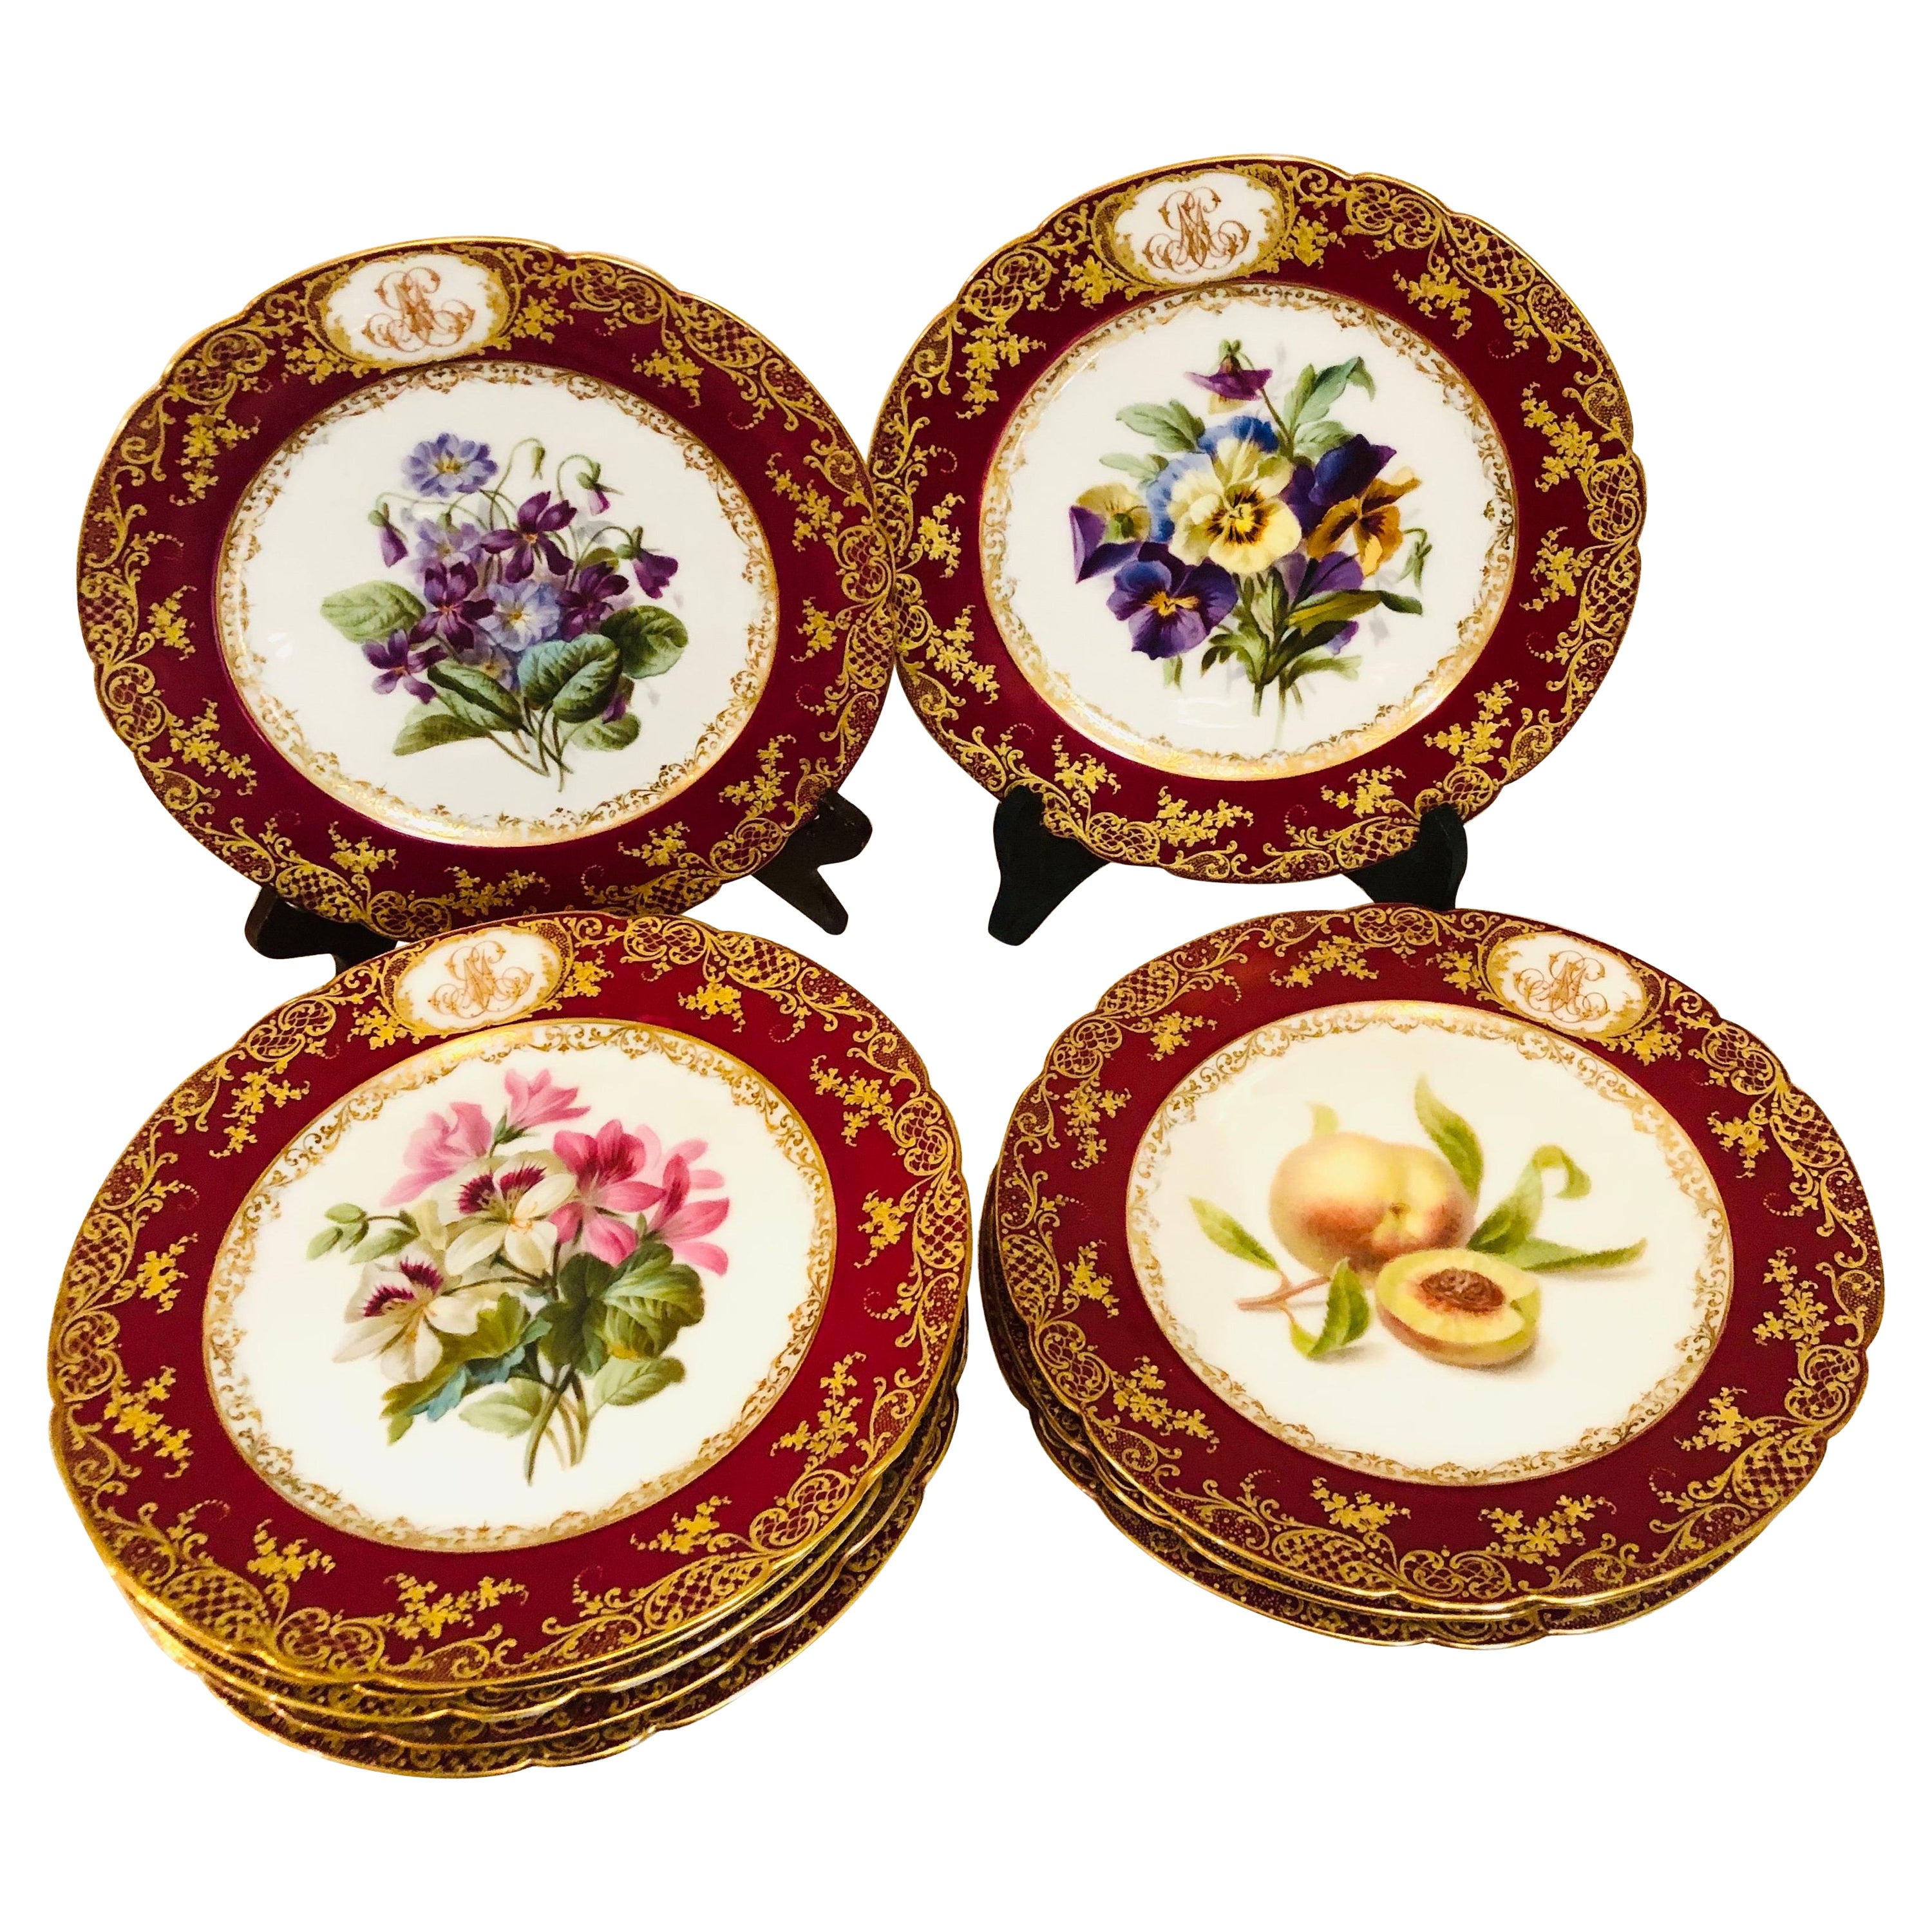 Ten Paris Porcelain Plates Each Painted with Different Flower Bouquets and Fruit For Sale